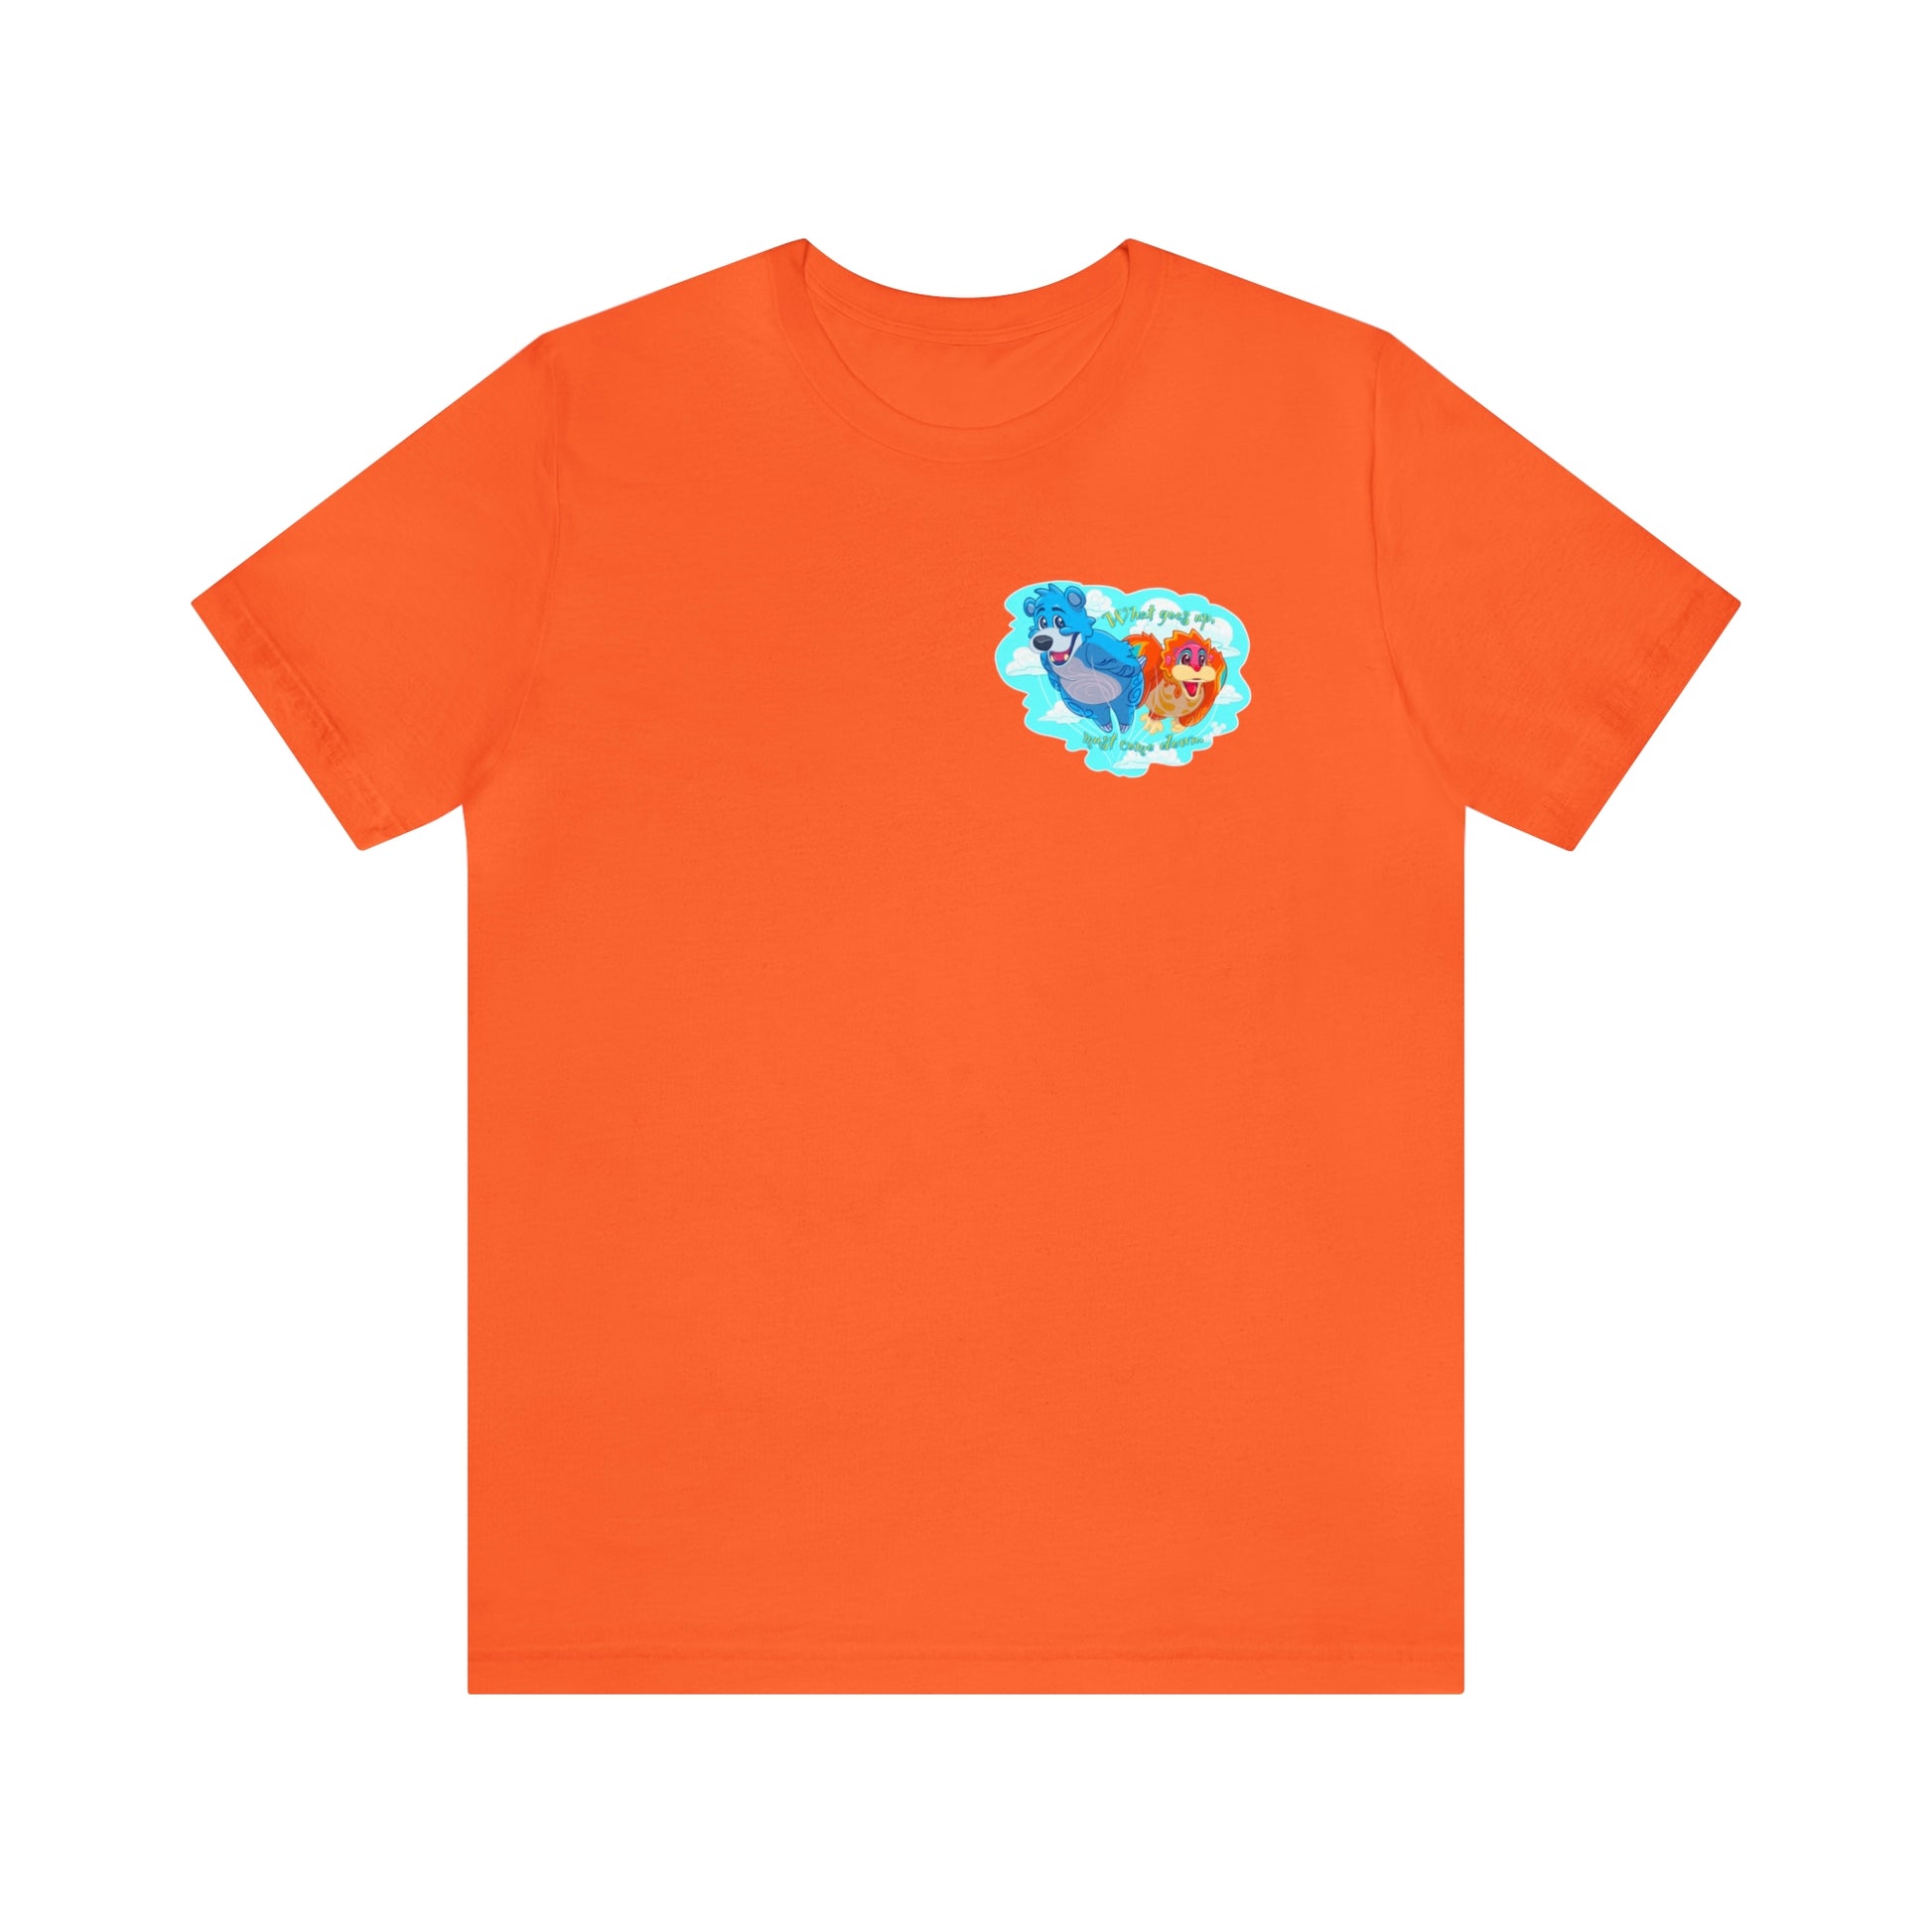 Kite Tails Tee in orange